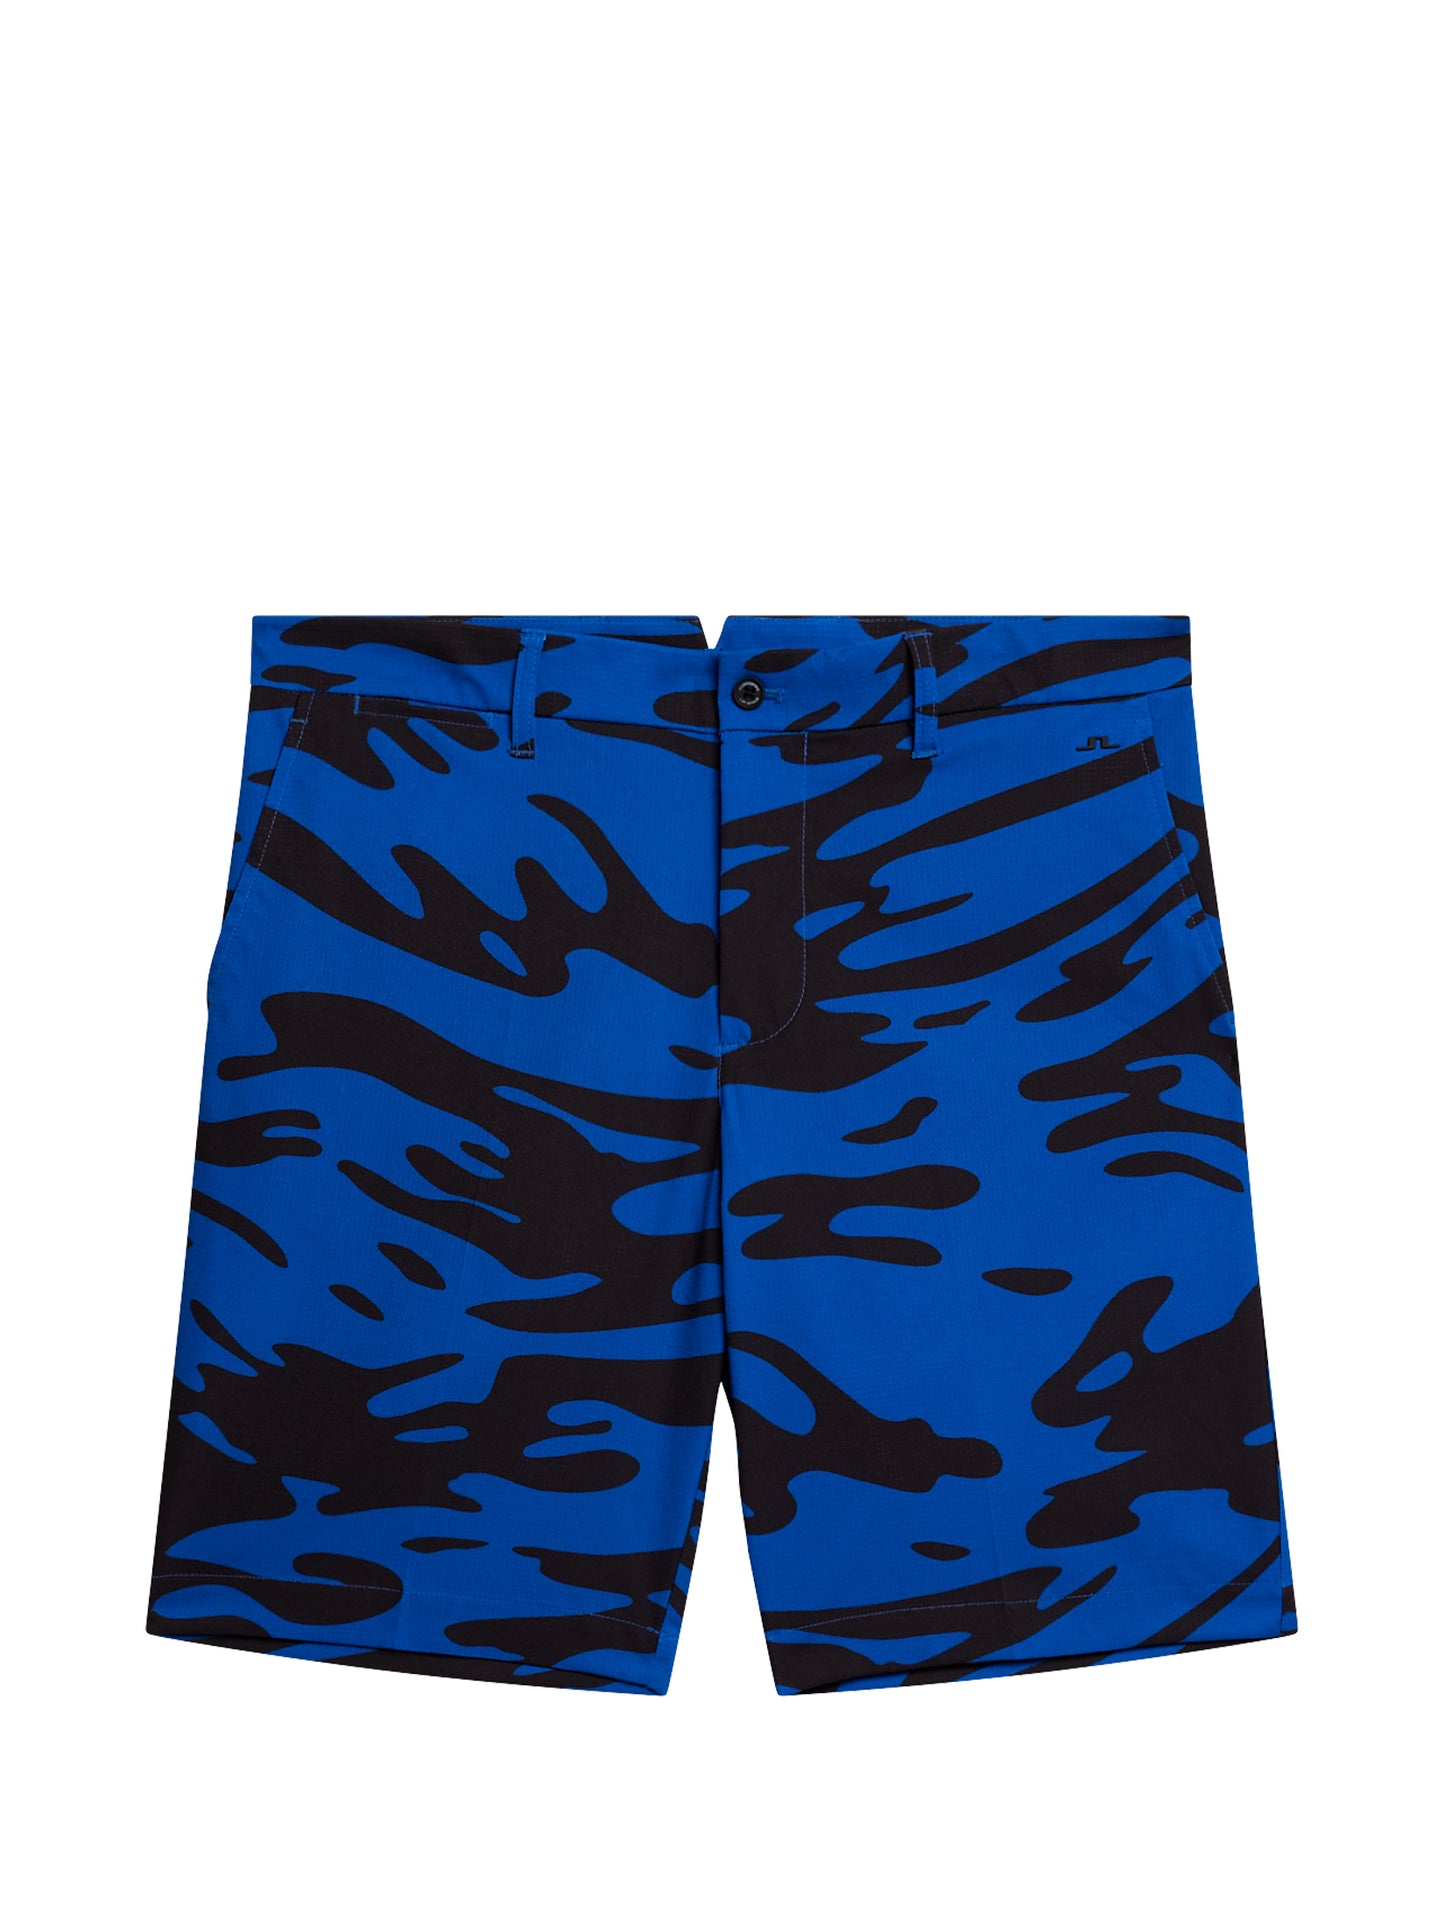 Tim Print Shorts / Neptune Nautical Blue